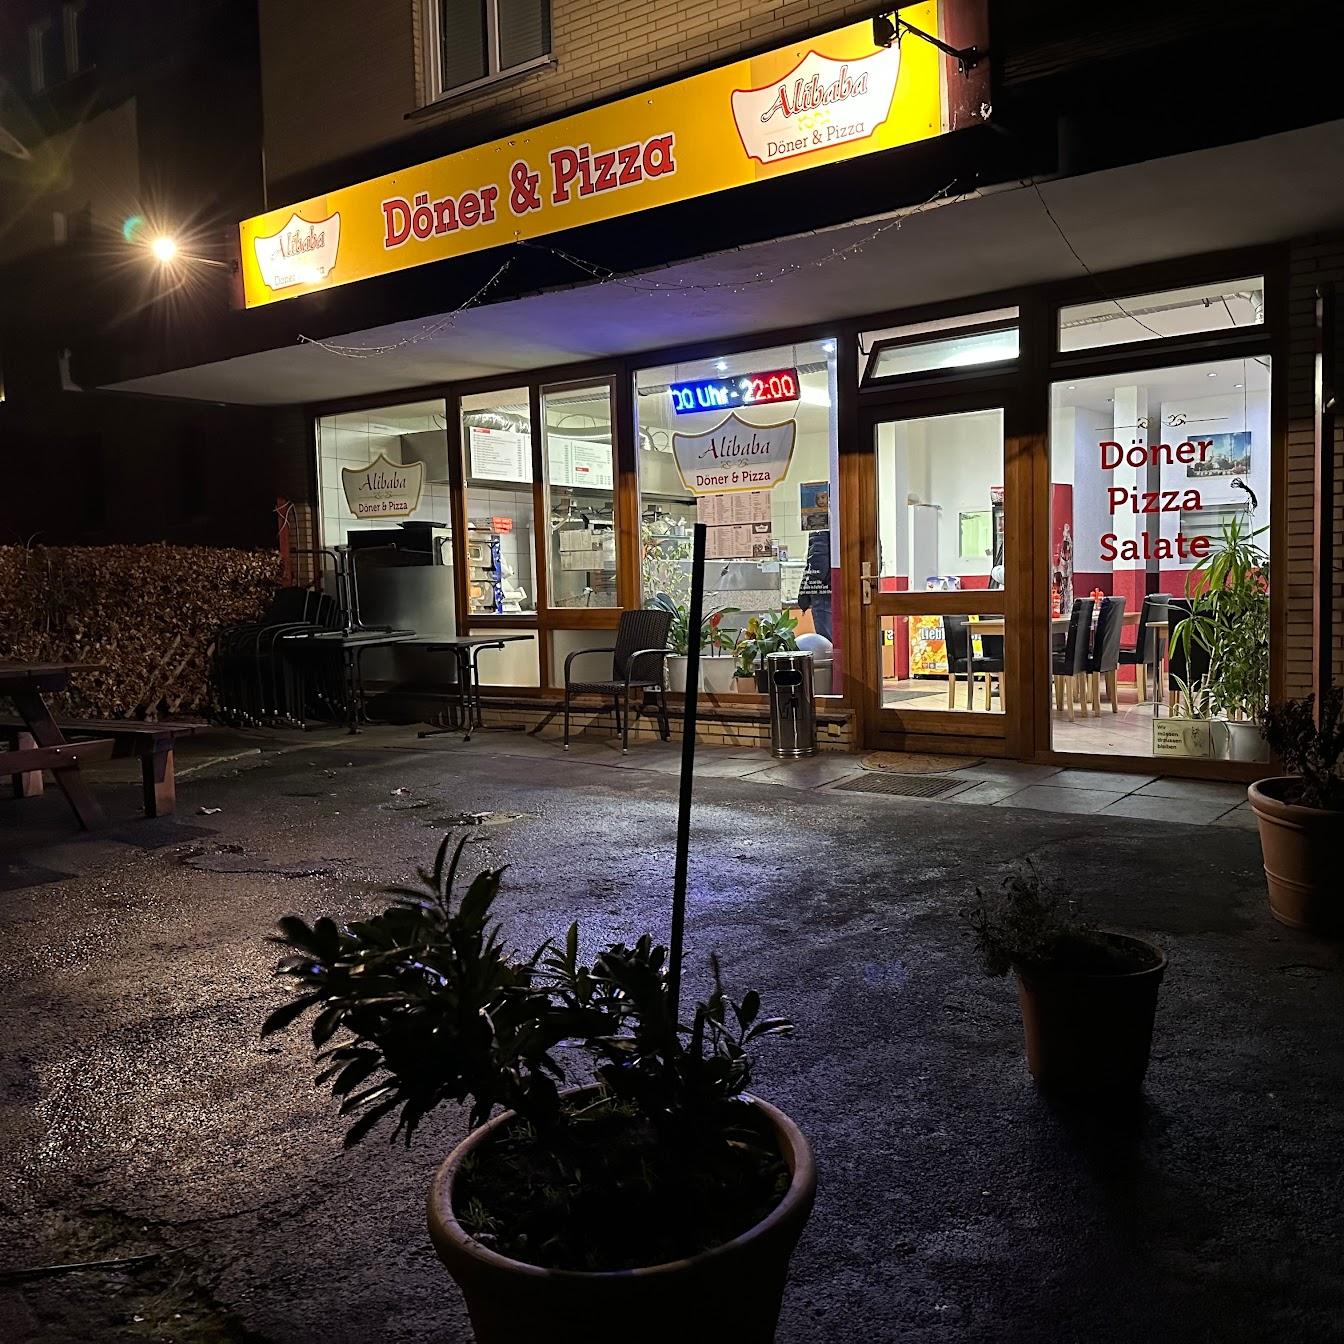 Restaurant "Alibaba Döner & Pizza" in Holzminden